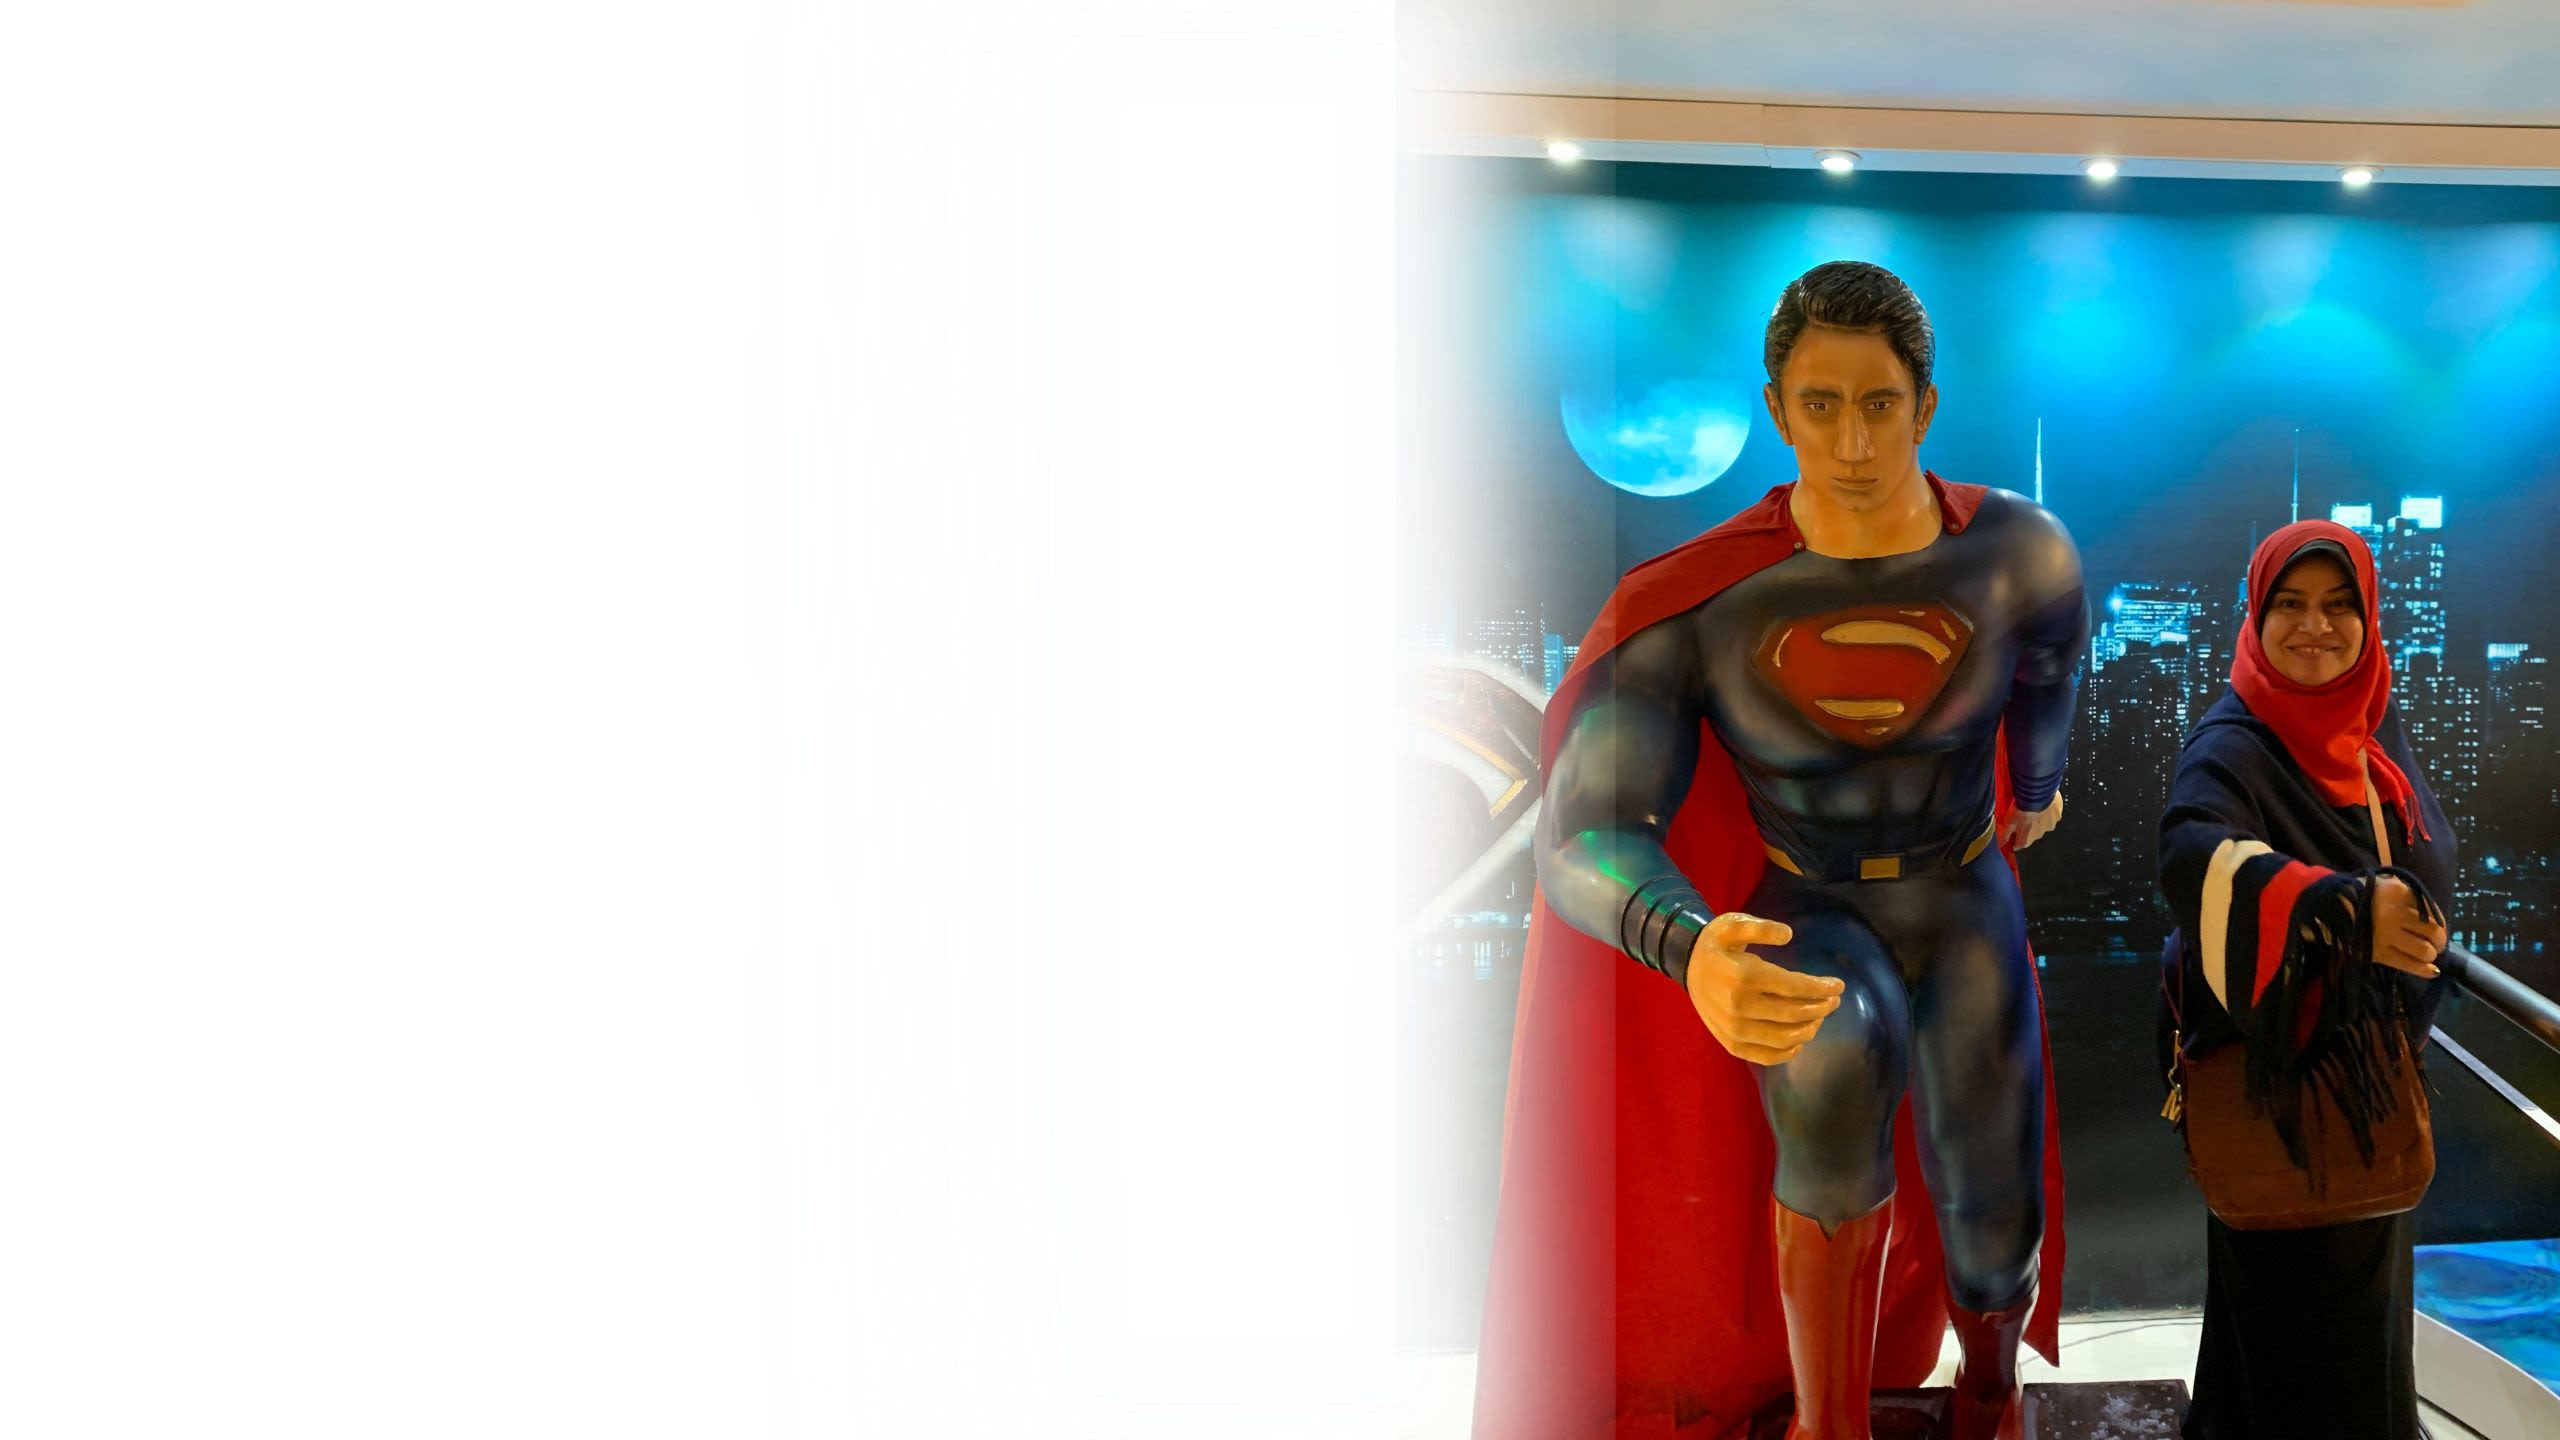 Mona Jebril with Superman